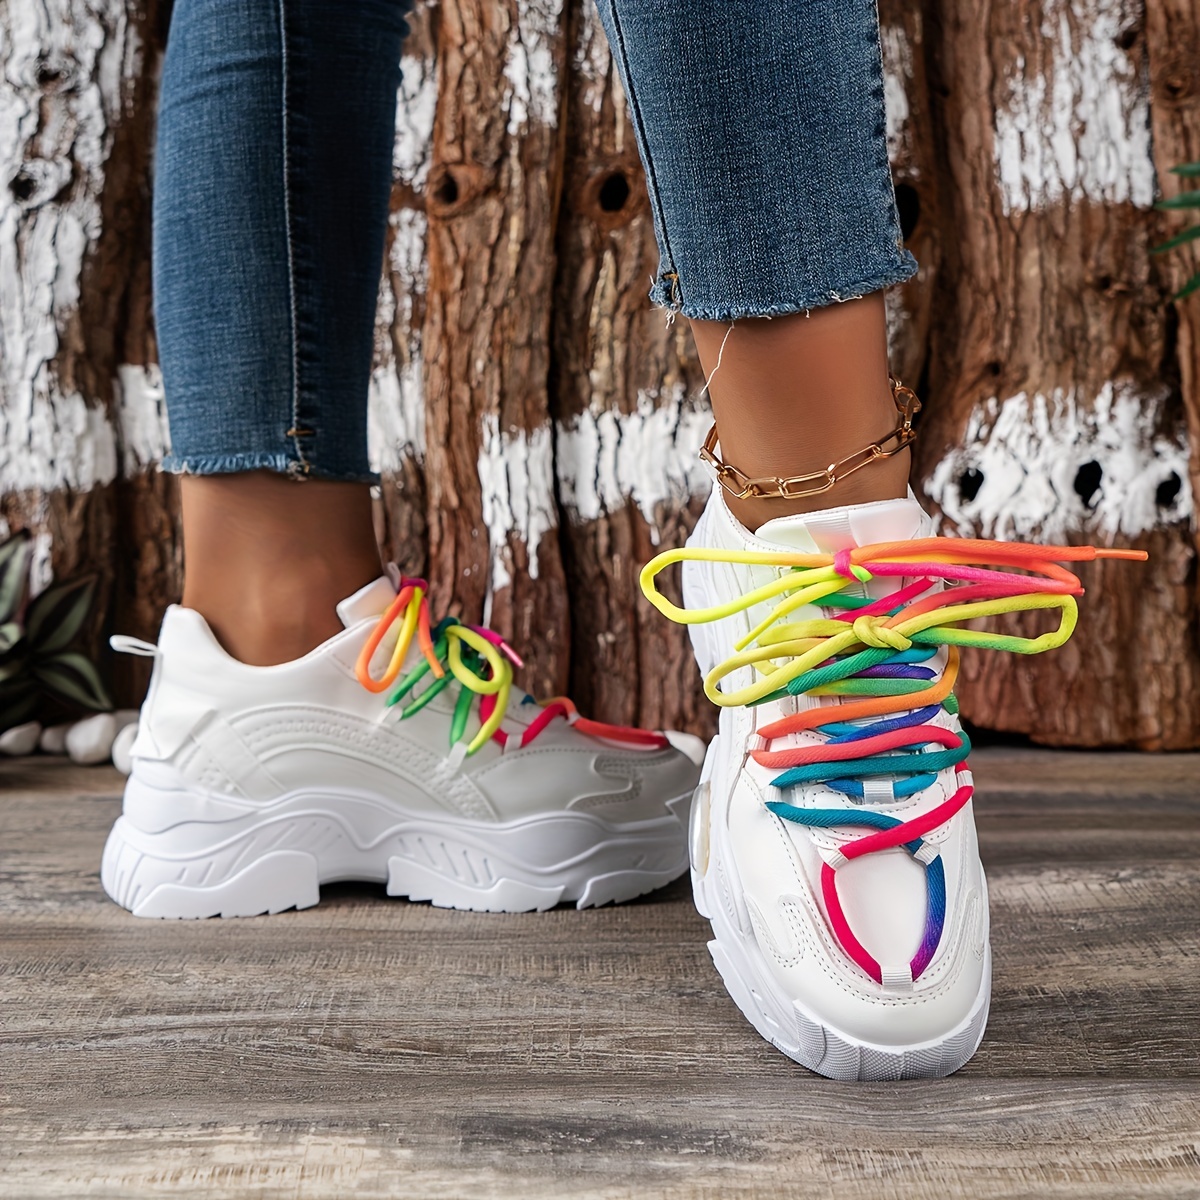 Calzado Barefoot - Tan bonitos como un arcoíris 🌈 Los zapatos